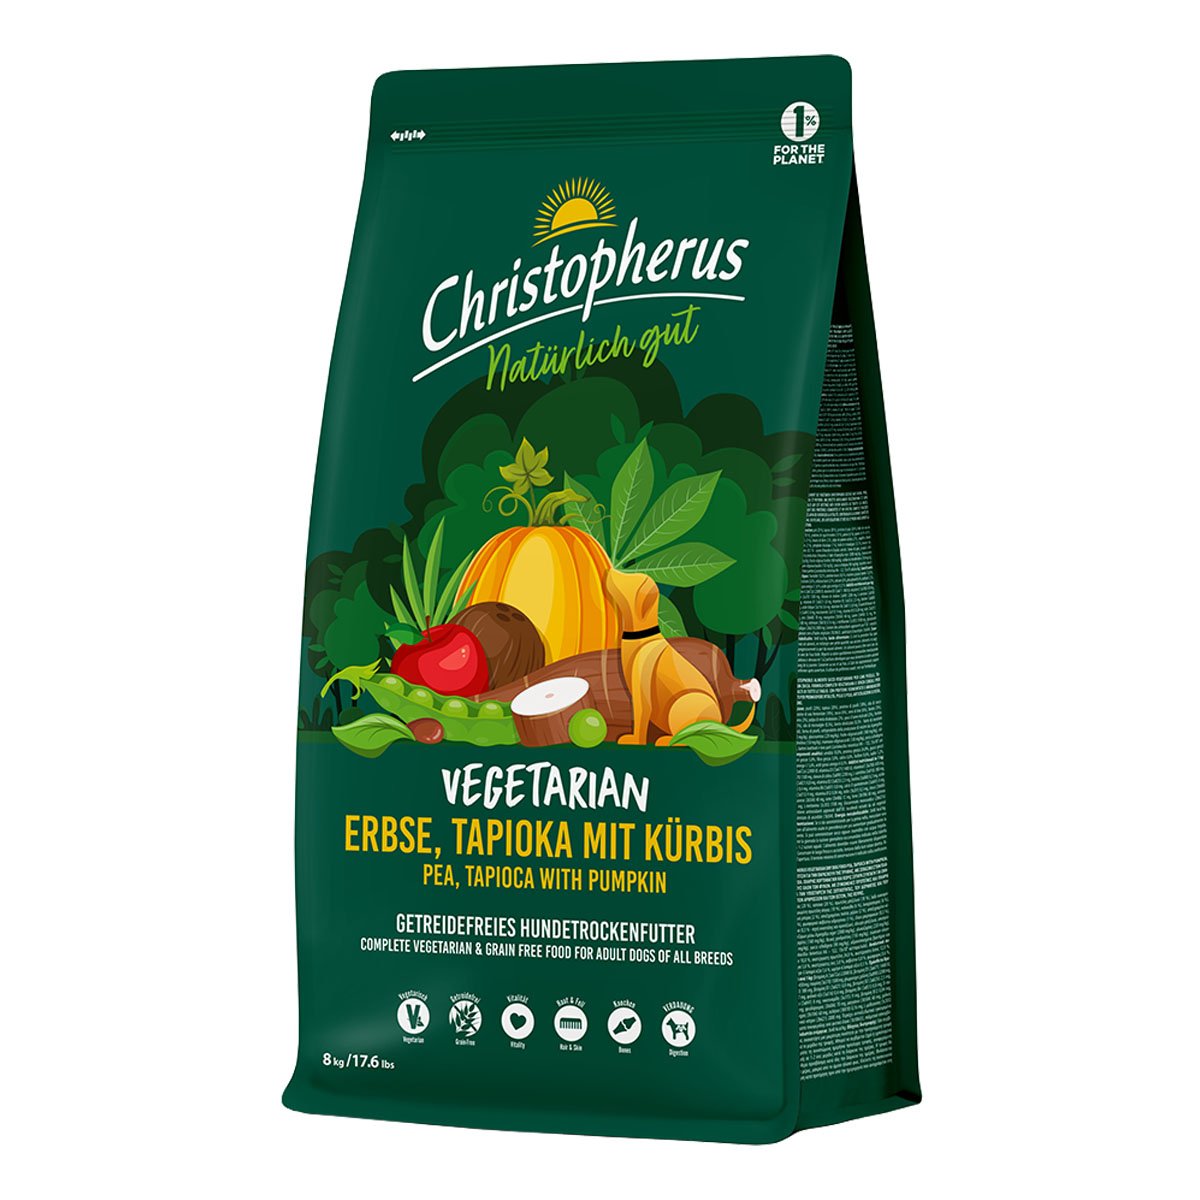 Christopherus Vegetarian - Erbse, Tapioka mit Kürbis 8kg von Christopherus